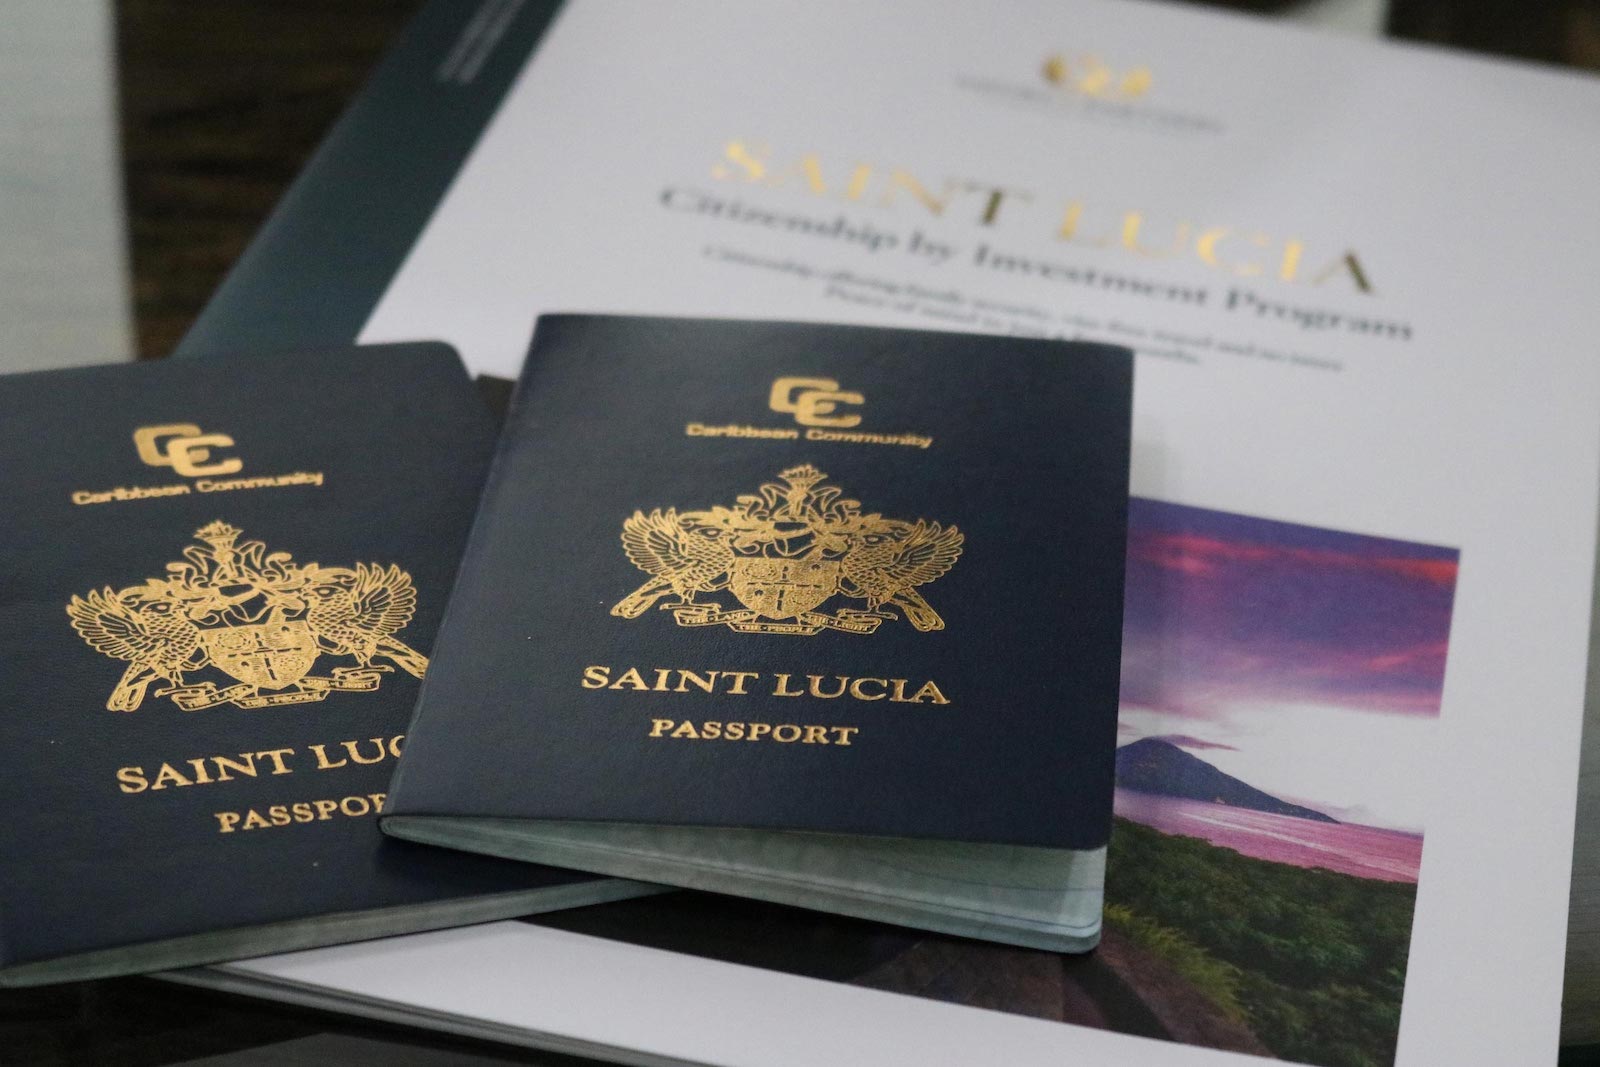 Saint Lucia Photos | Second Passport St Lucia - Savory \u0026 Partners